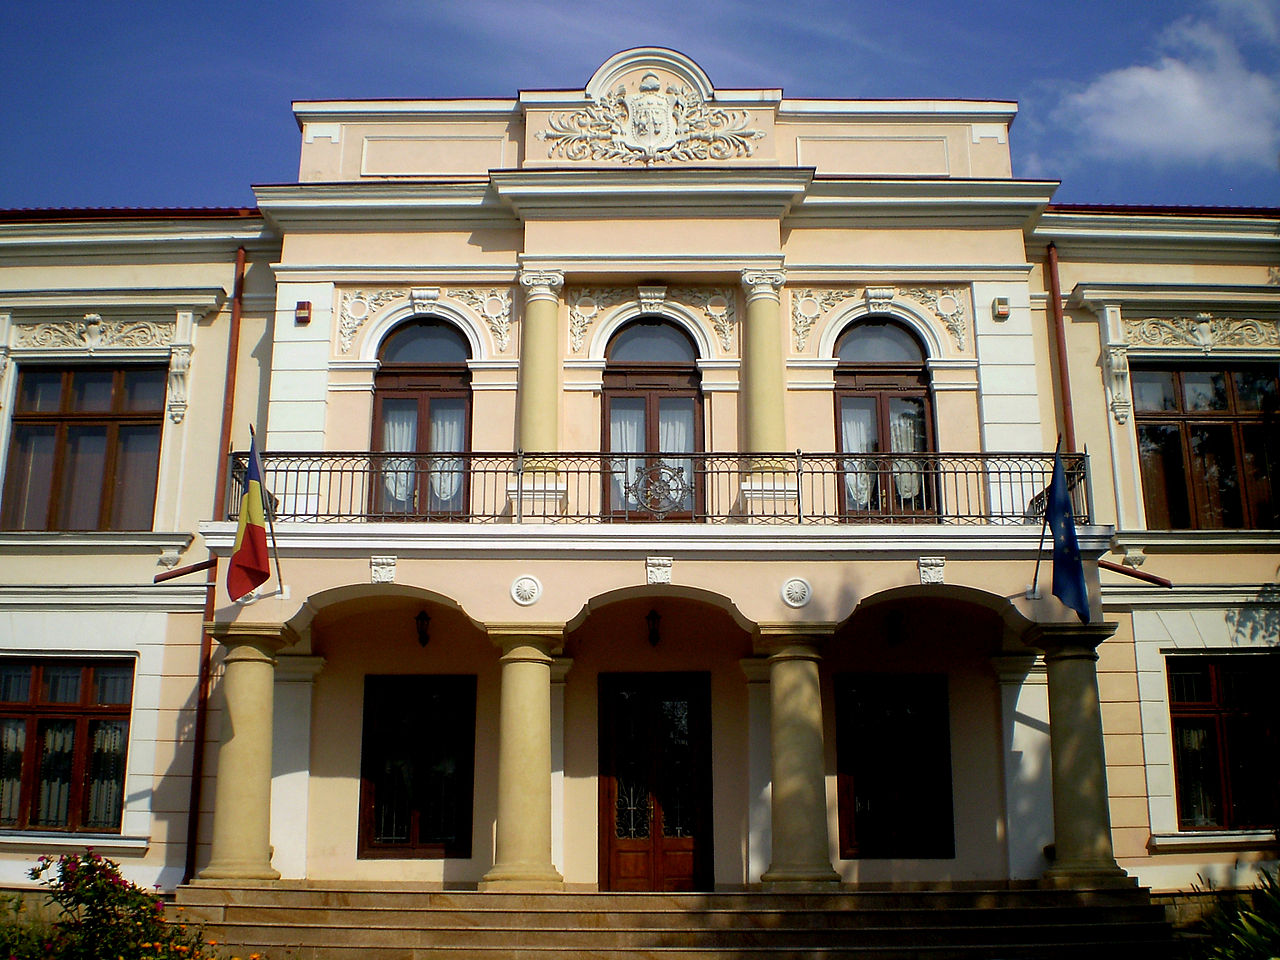 The Vasile Pogor Memorial House